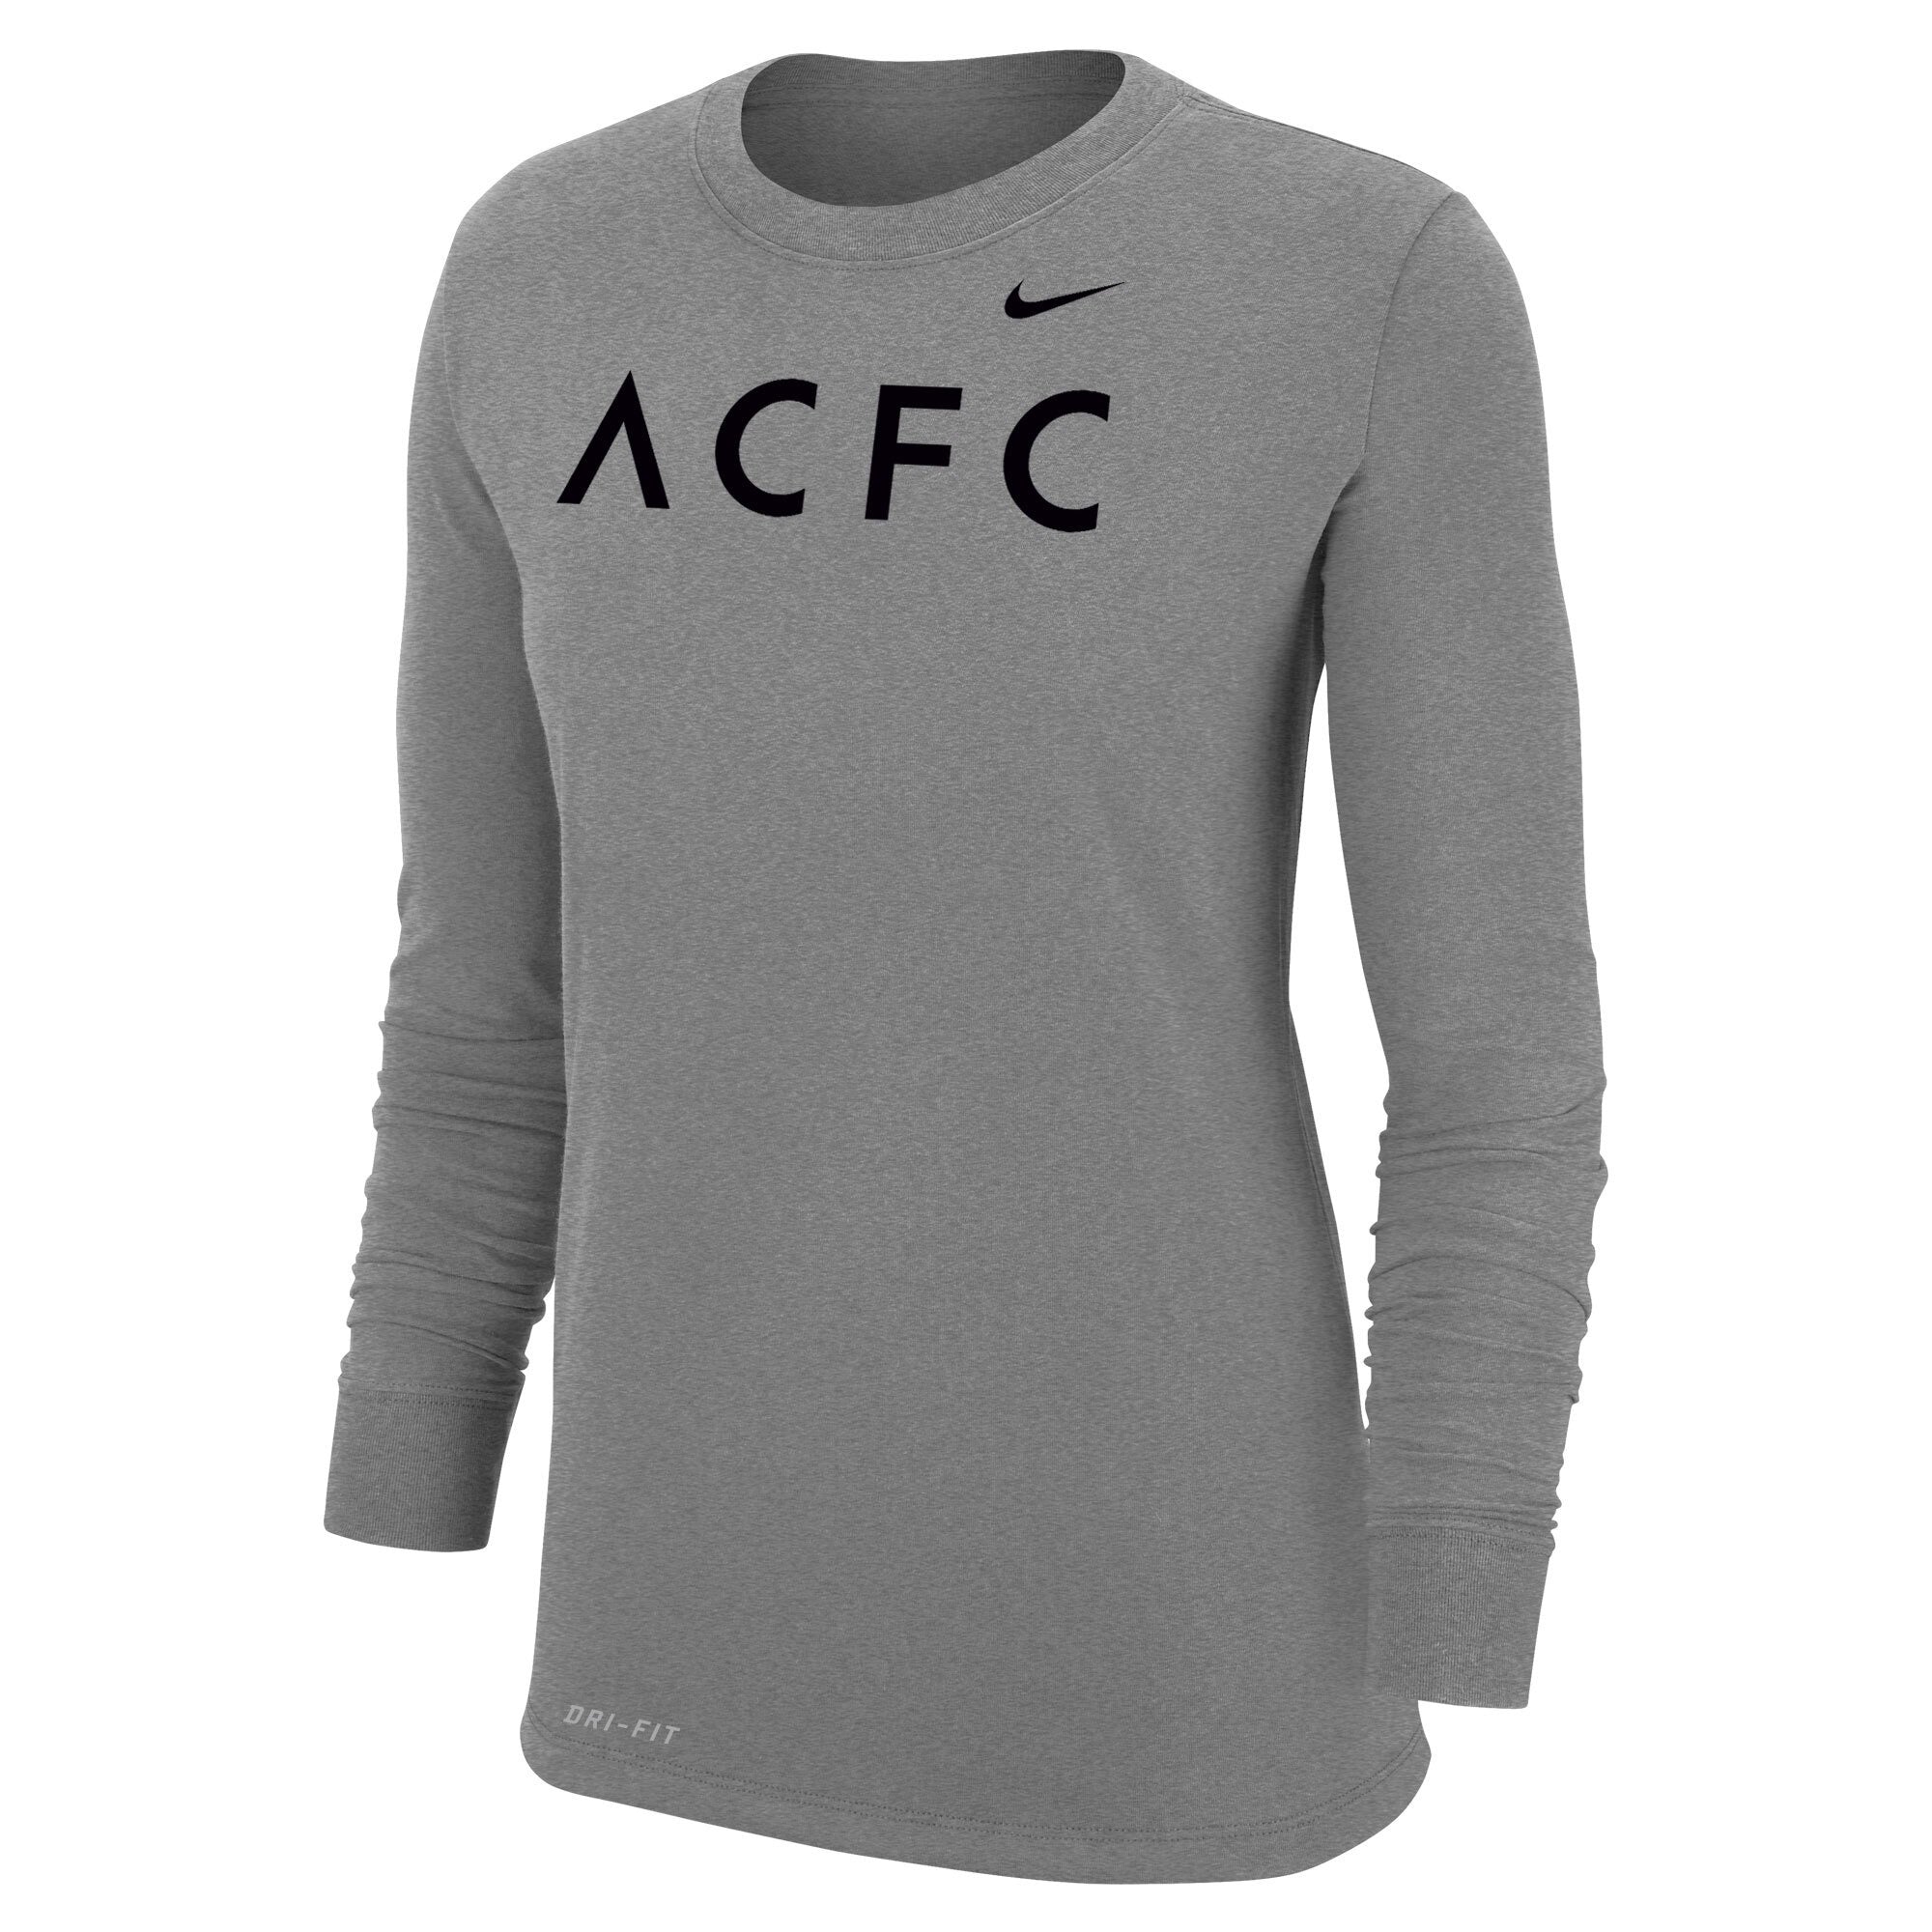 Camiseta Nike Dri-FIT de manga larga gris para ACFC Angel City FC